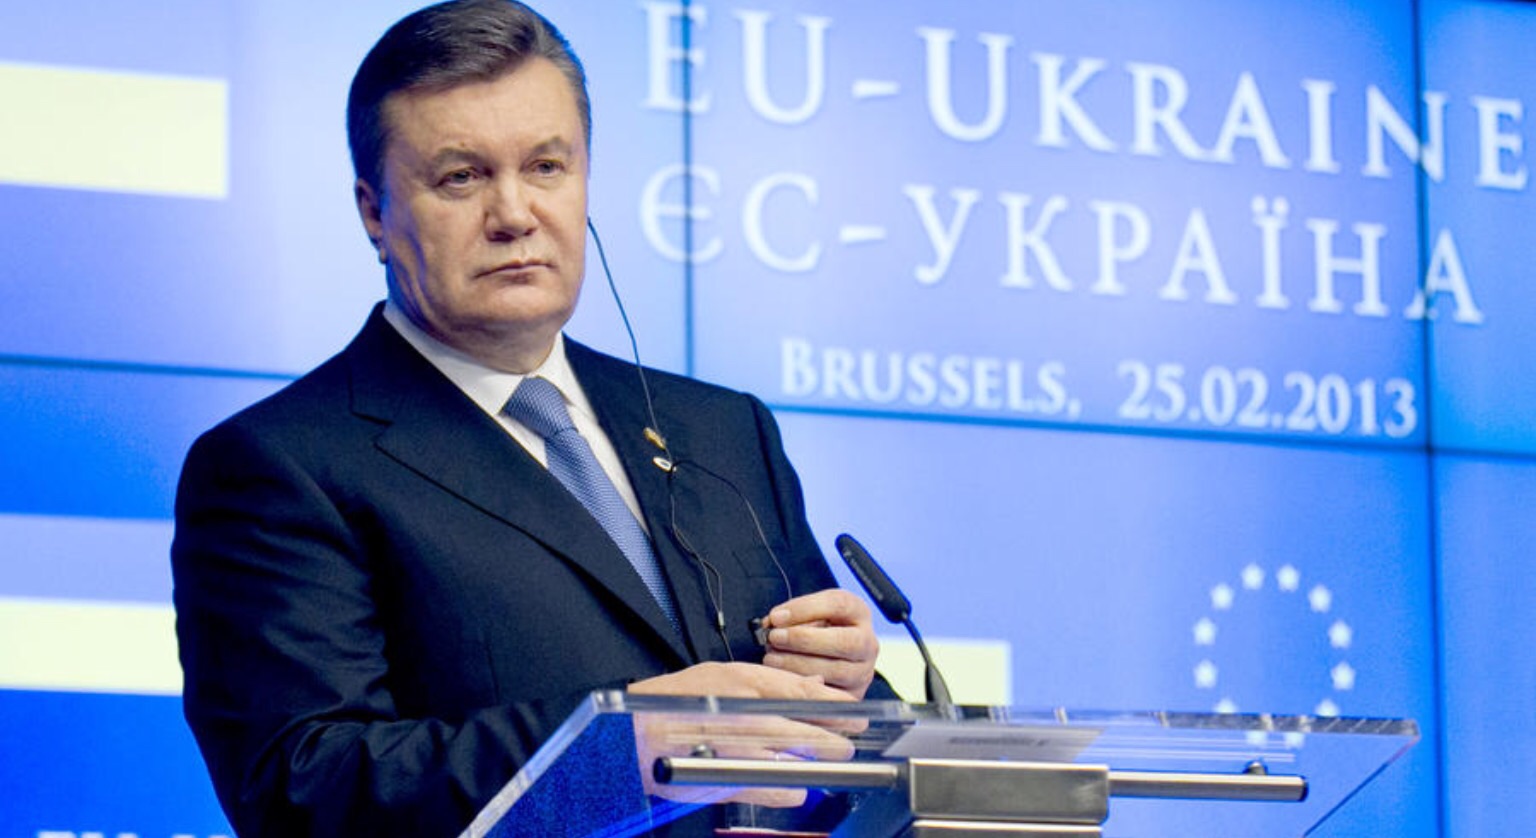 Виктор Янукович возглавил список символов коррупции Transparency International